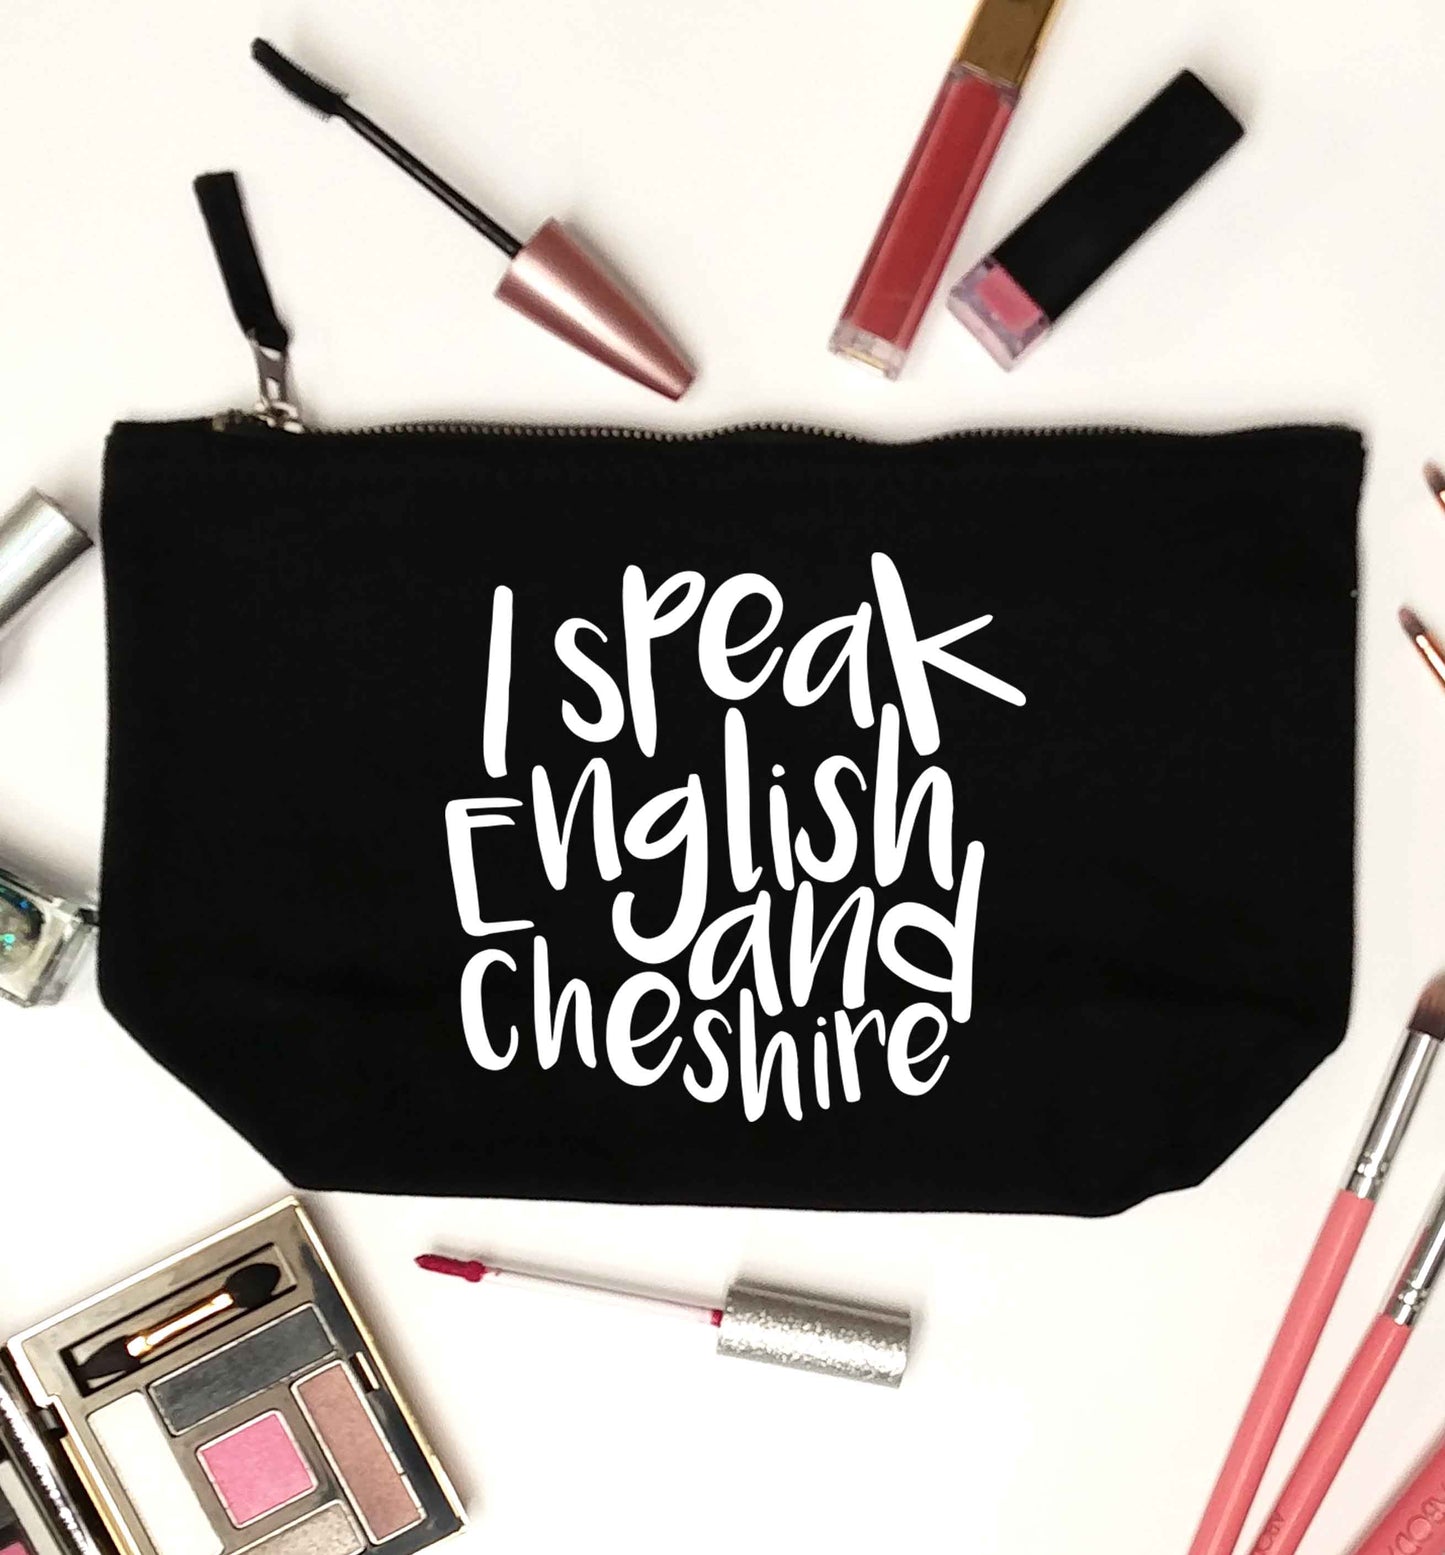 I speak English and Cheshire black makeup bag